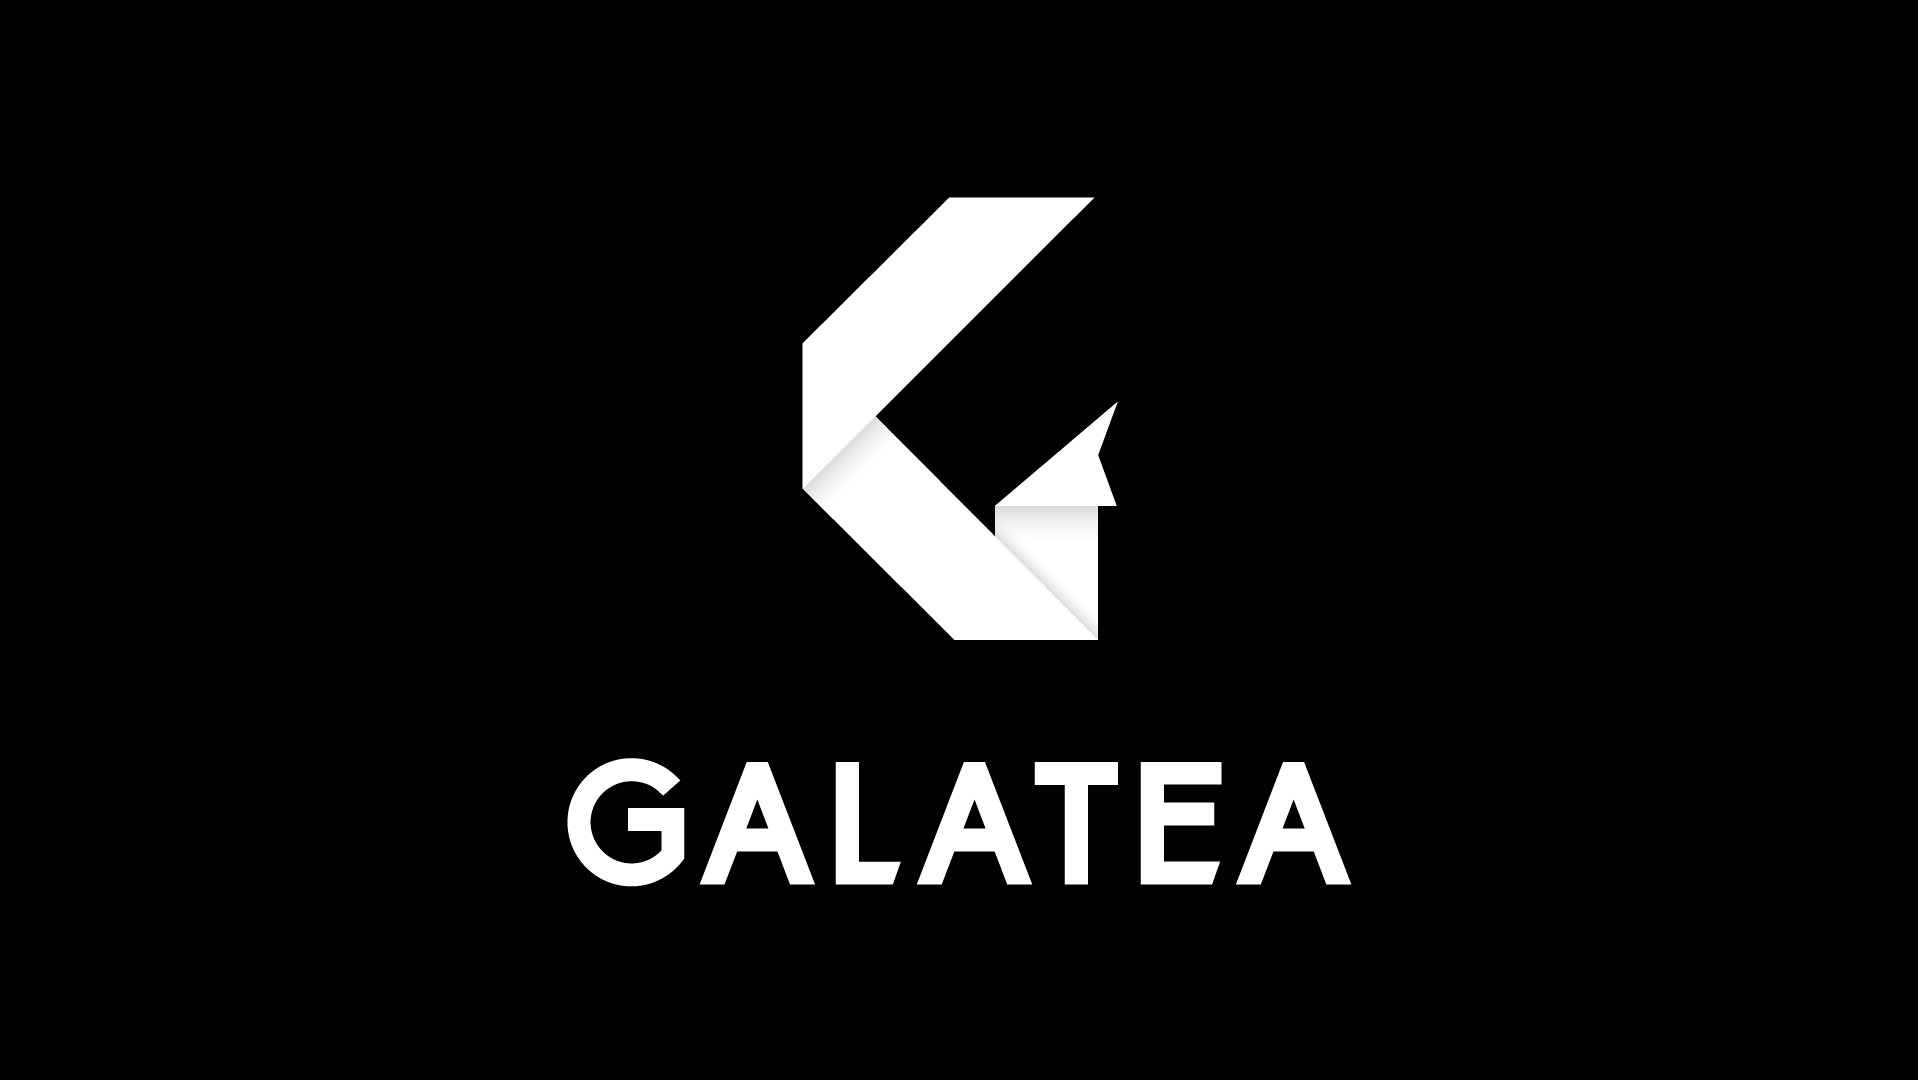 Galatea logo white onblack